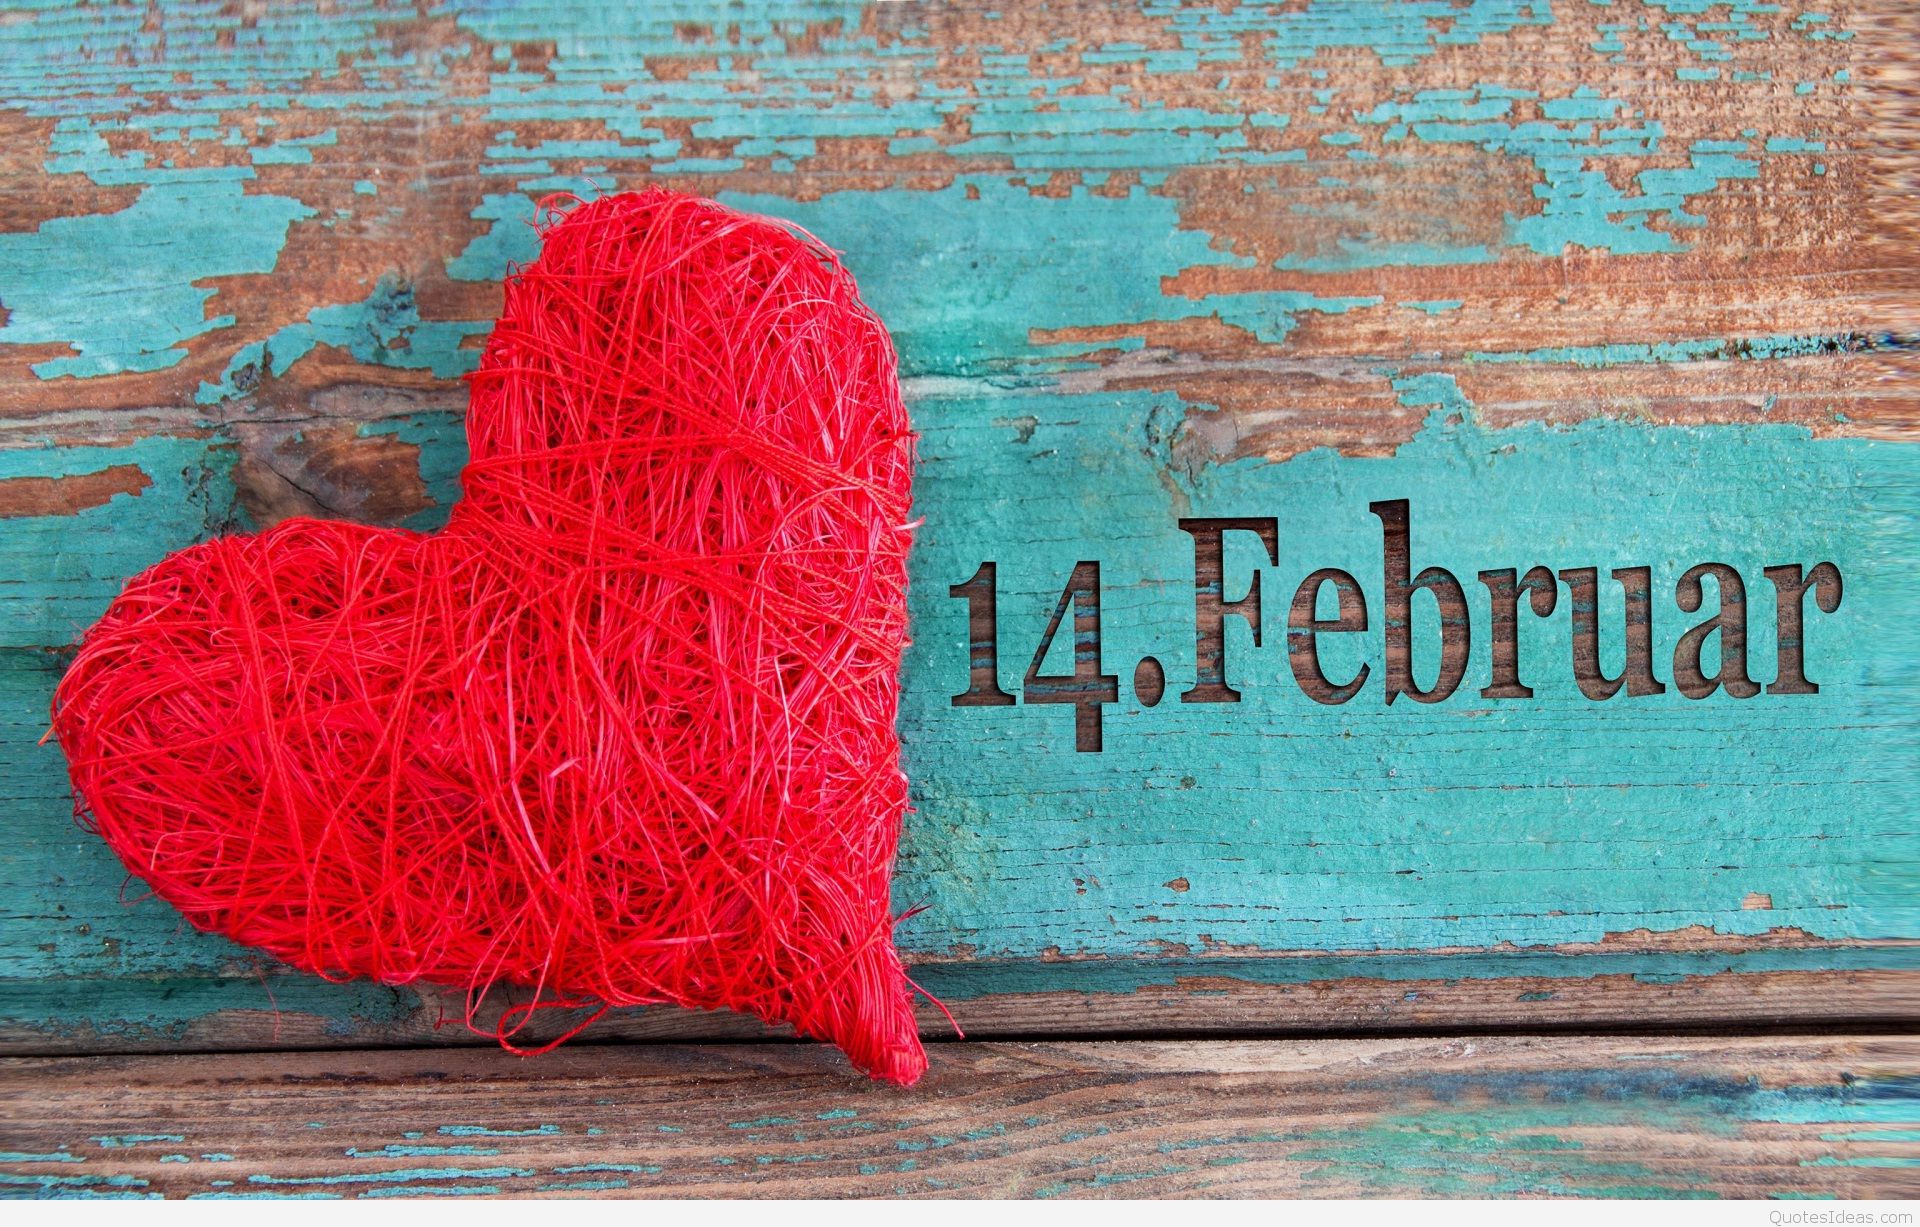 14 februar valentinstag tapete,rot,türkis,text,wand,herz